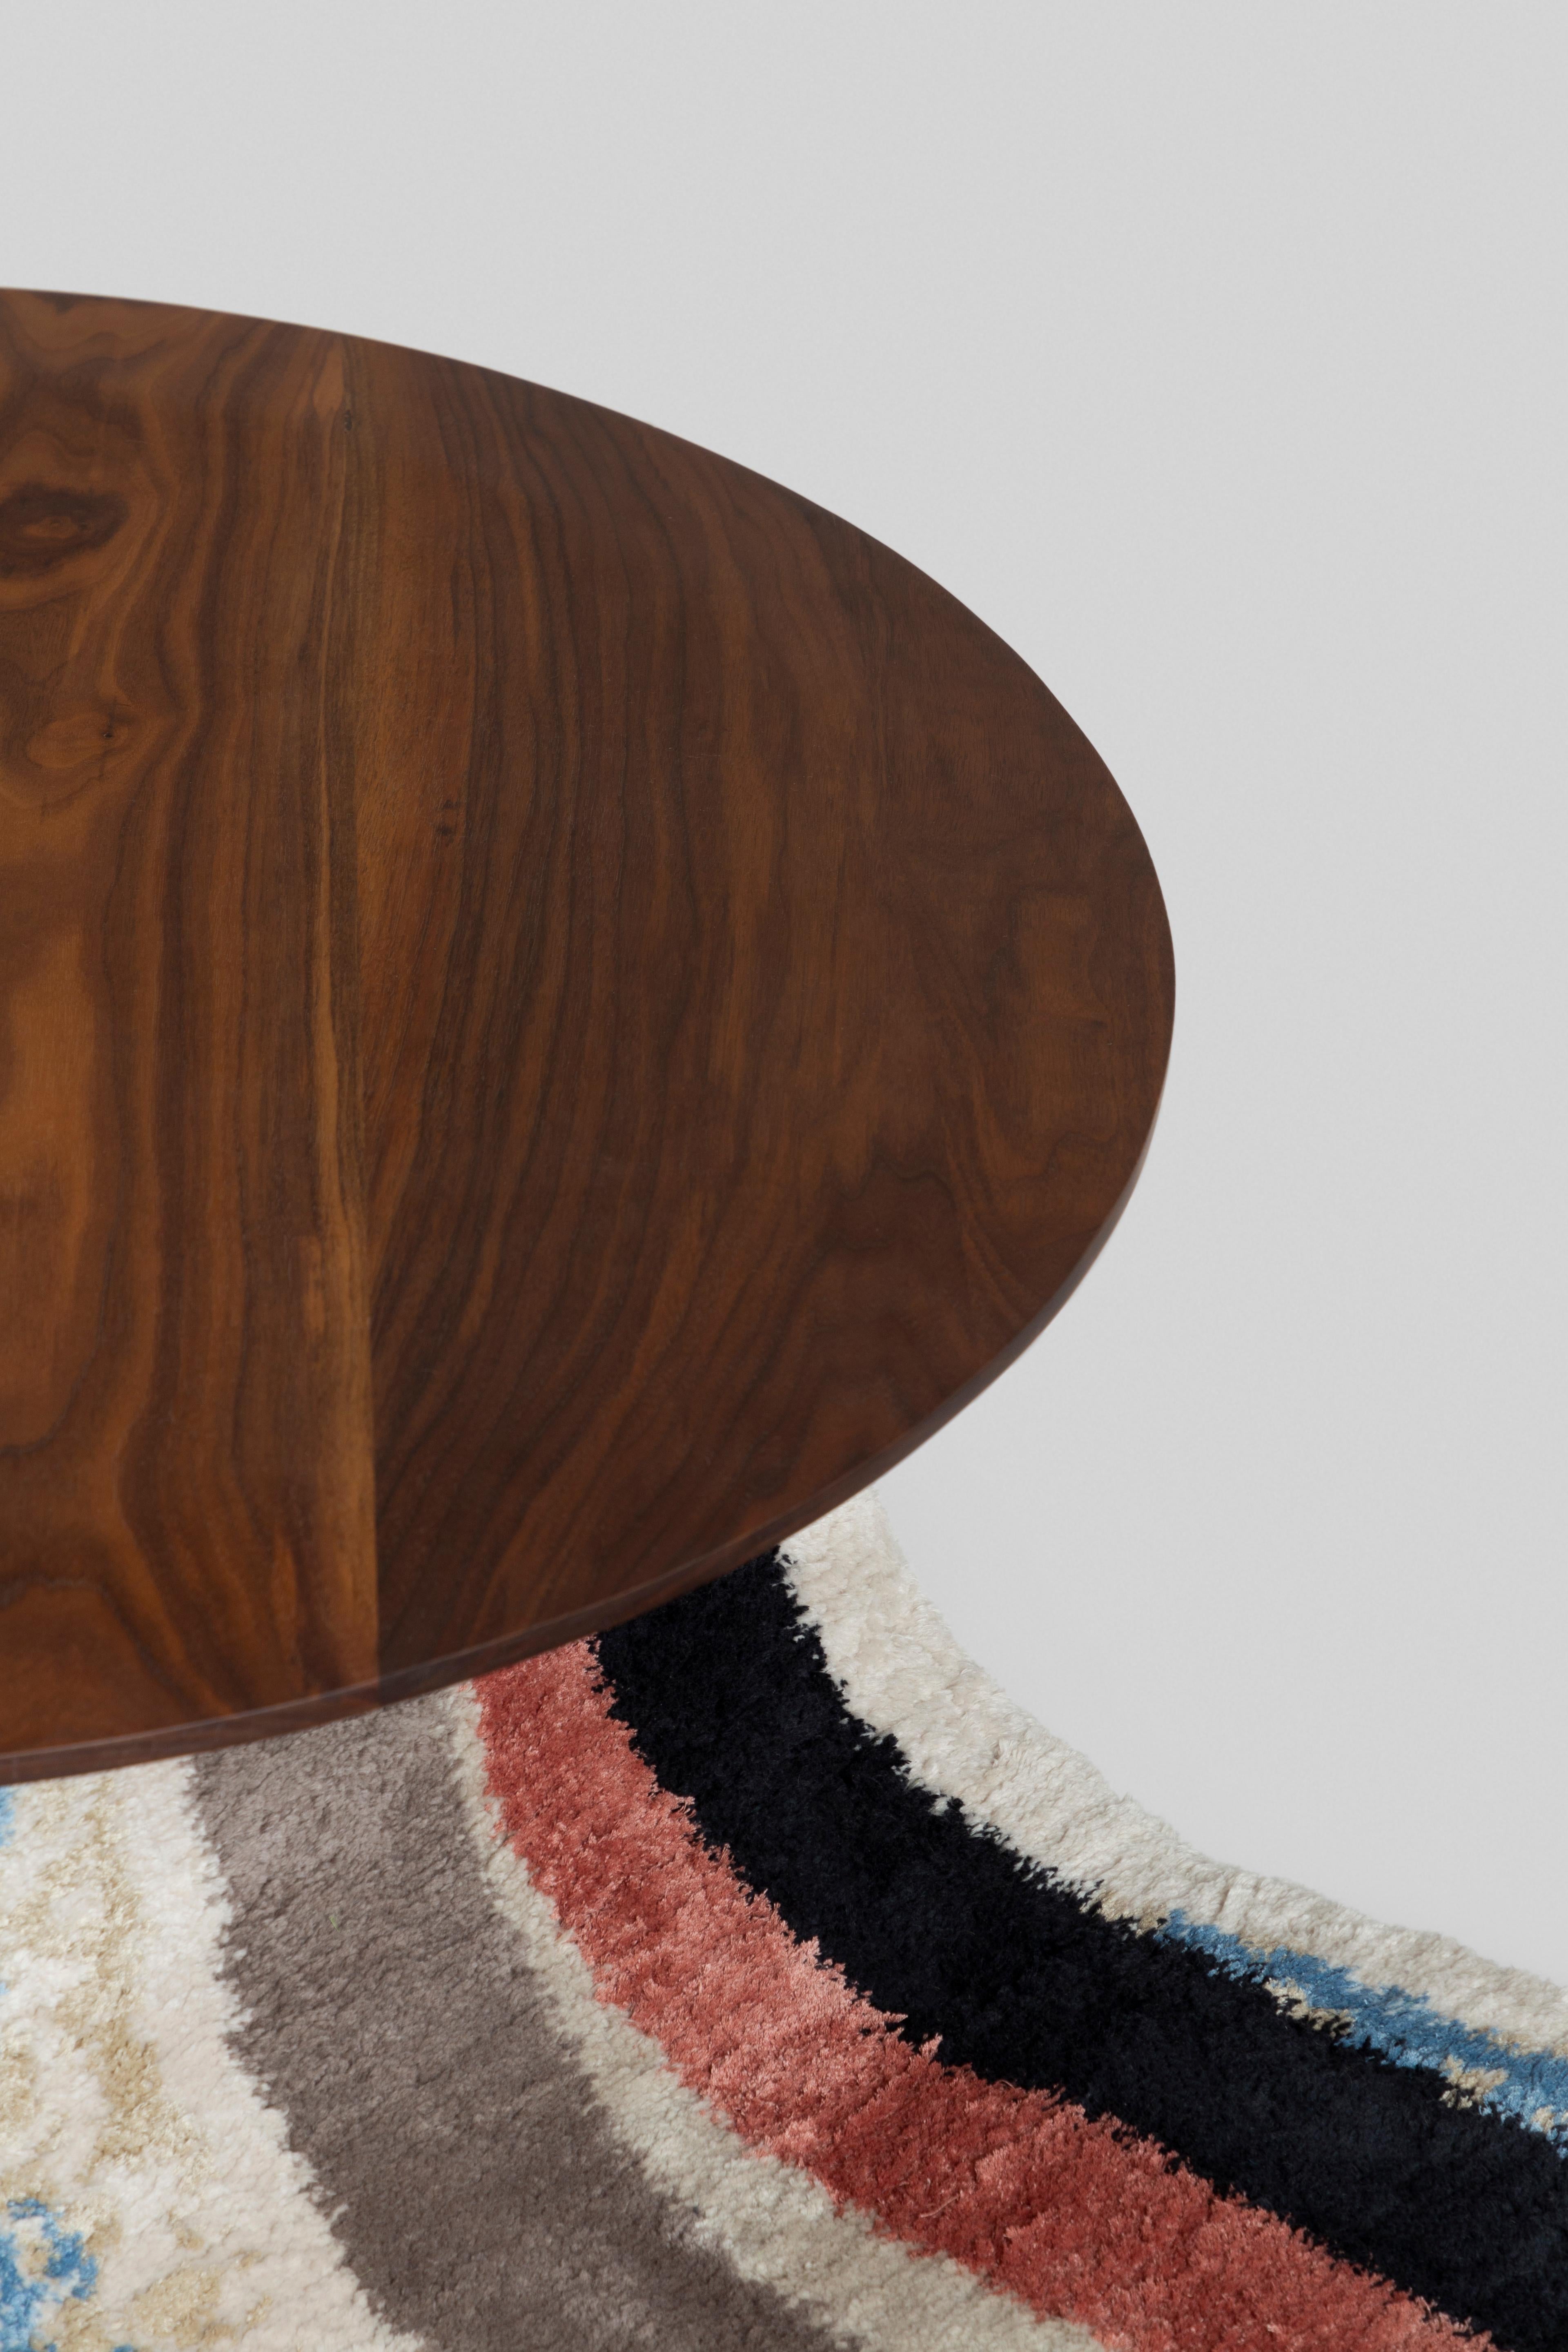 Woodwork Contemporary Walnut Coffee Table Rug by José María Balmaceda and ADHOC For Sale